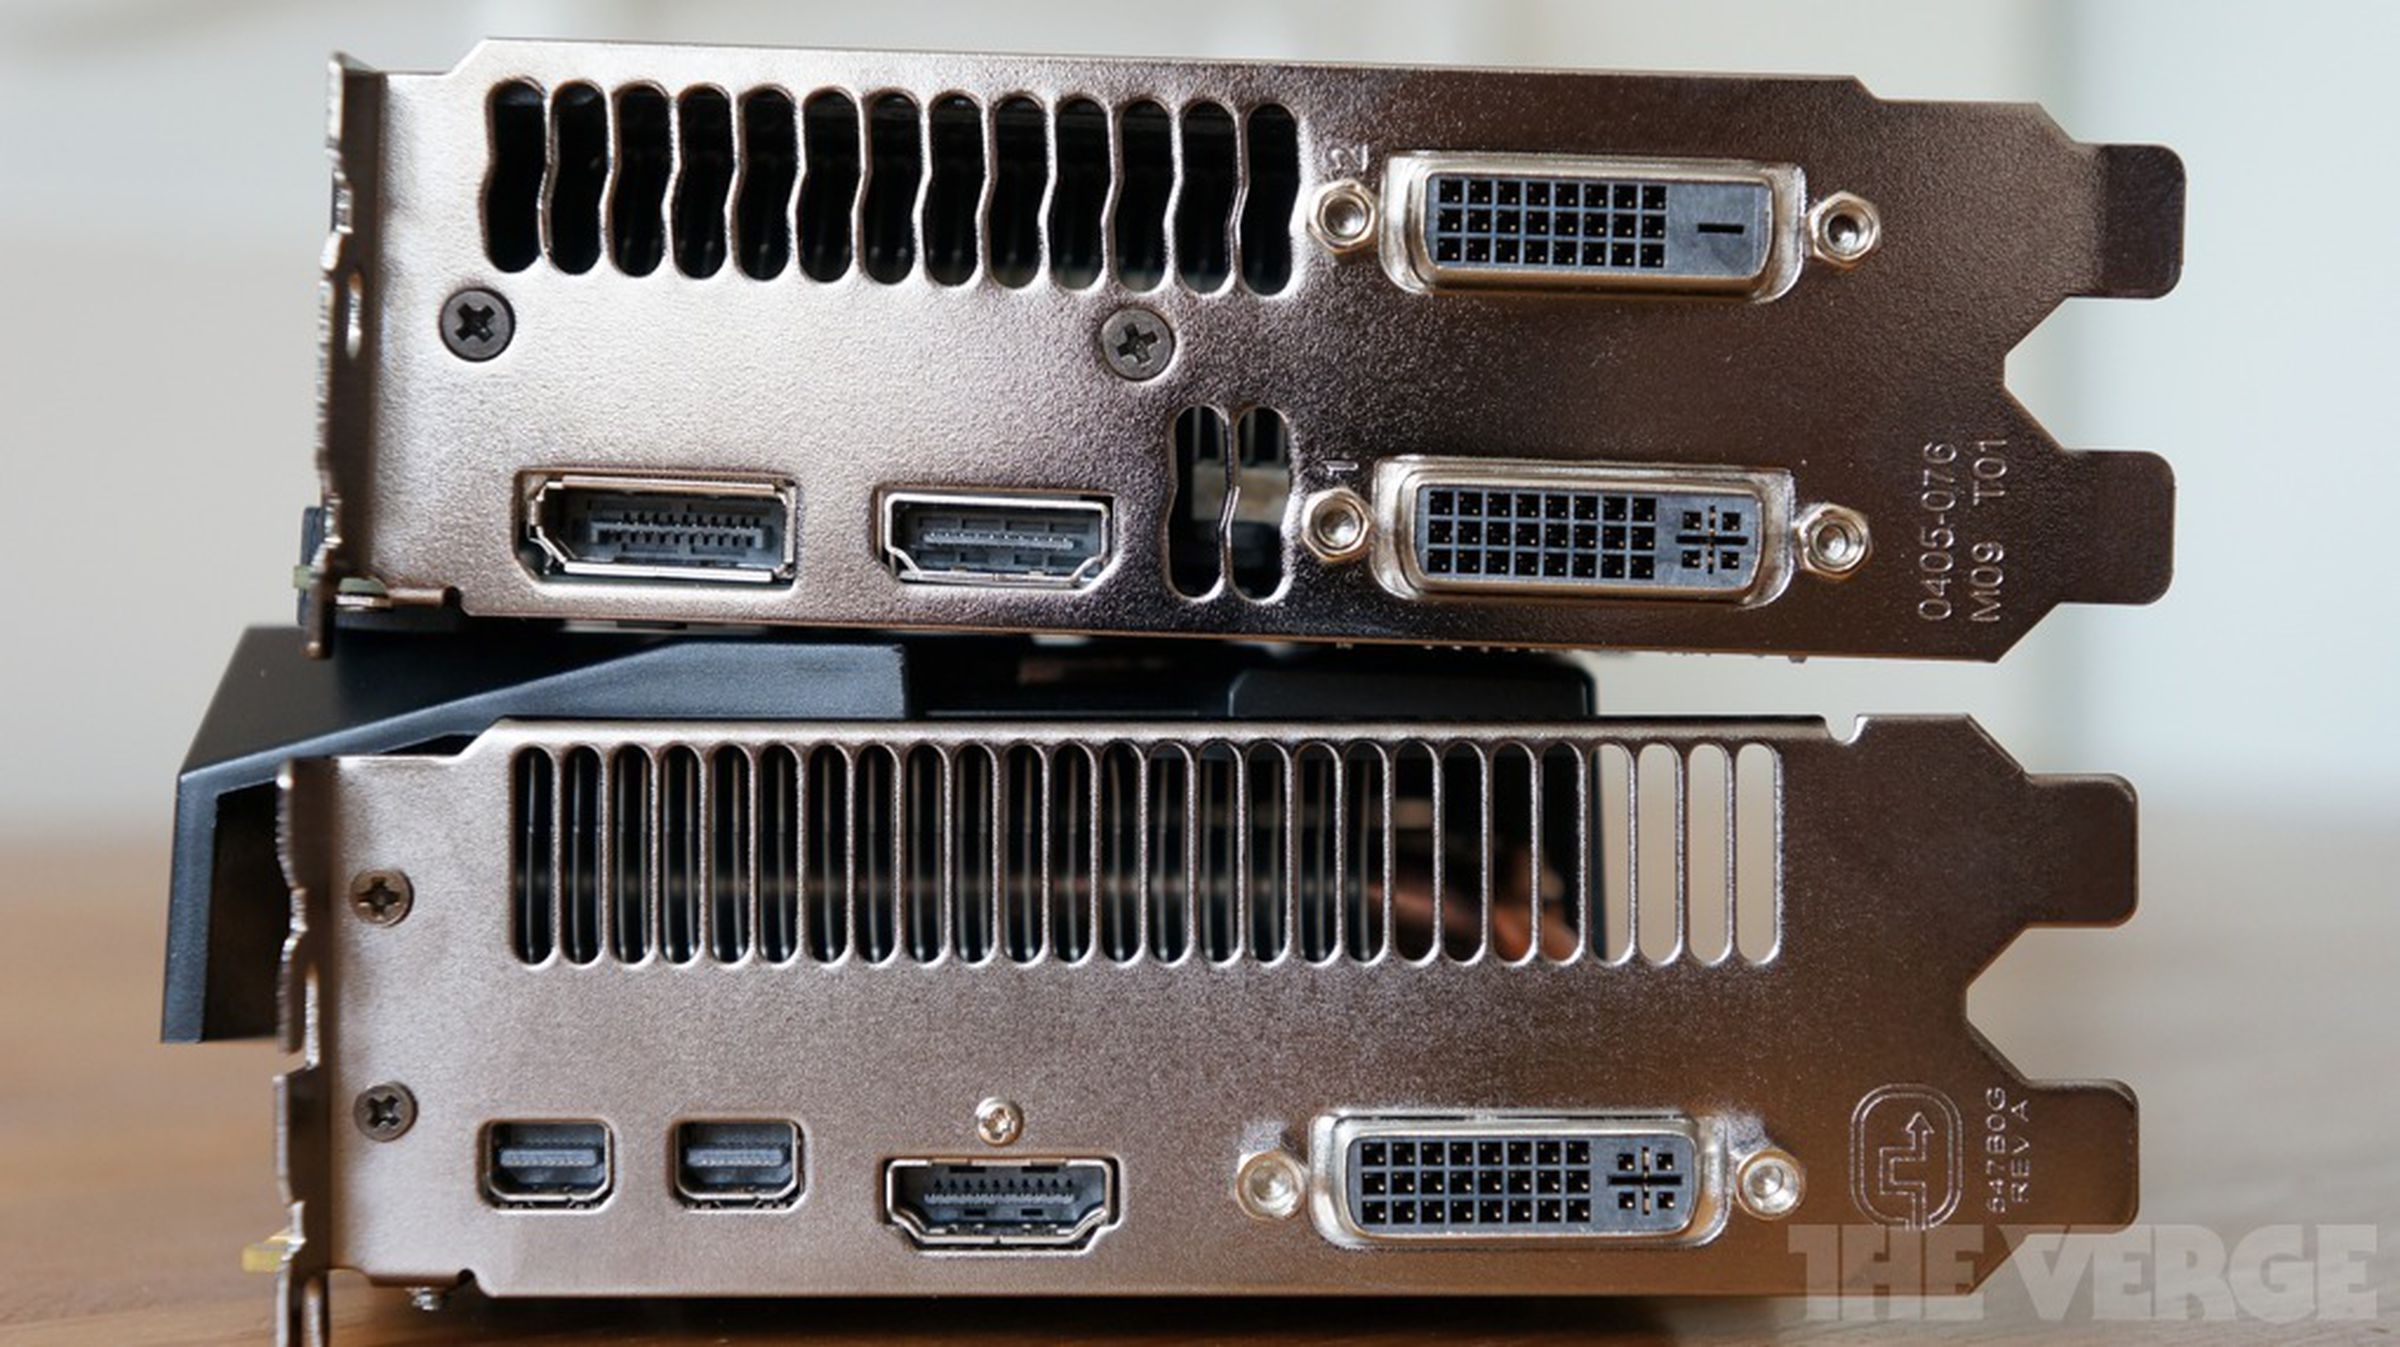 GeForce GTX 680 vs. Radeon HD 7970